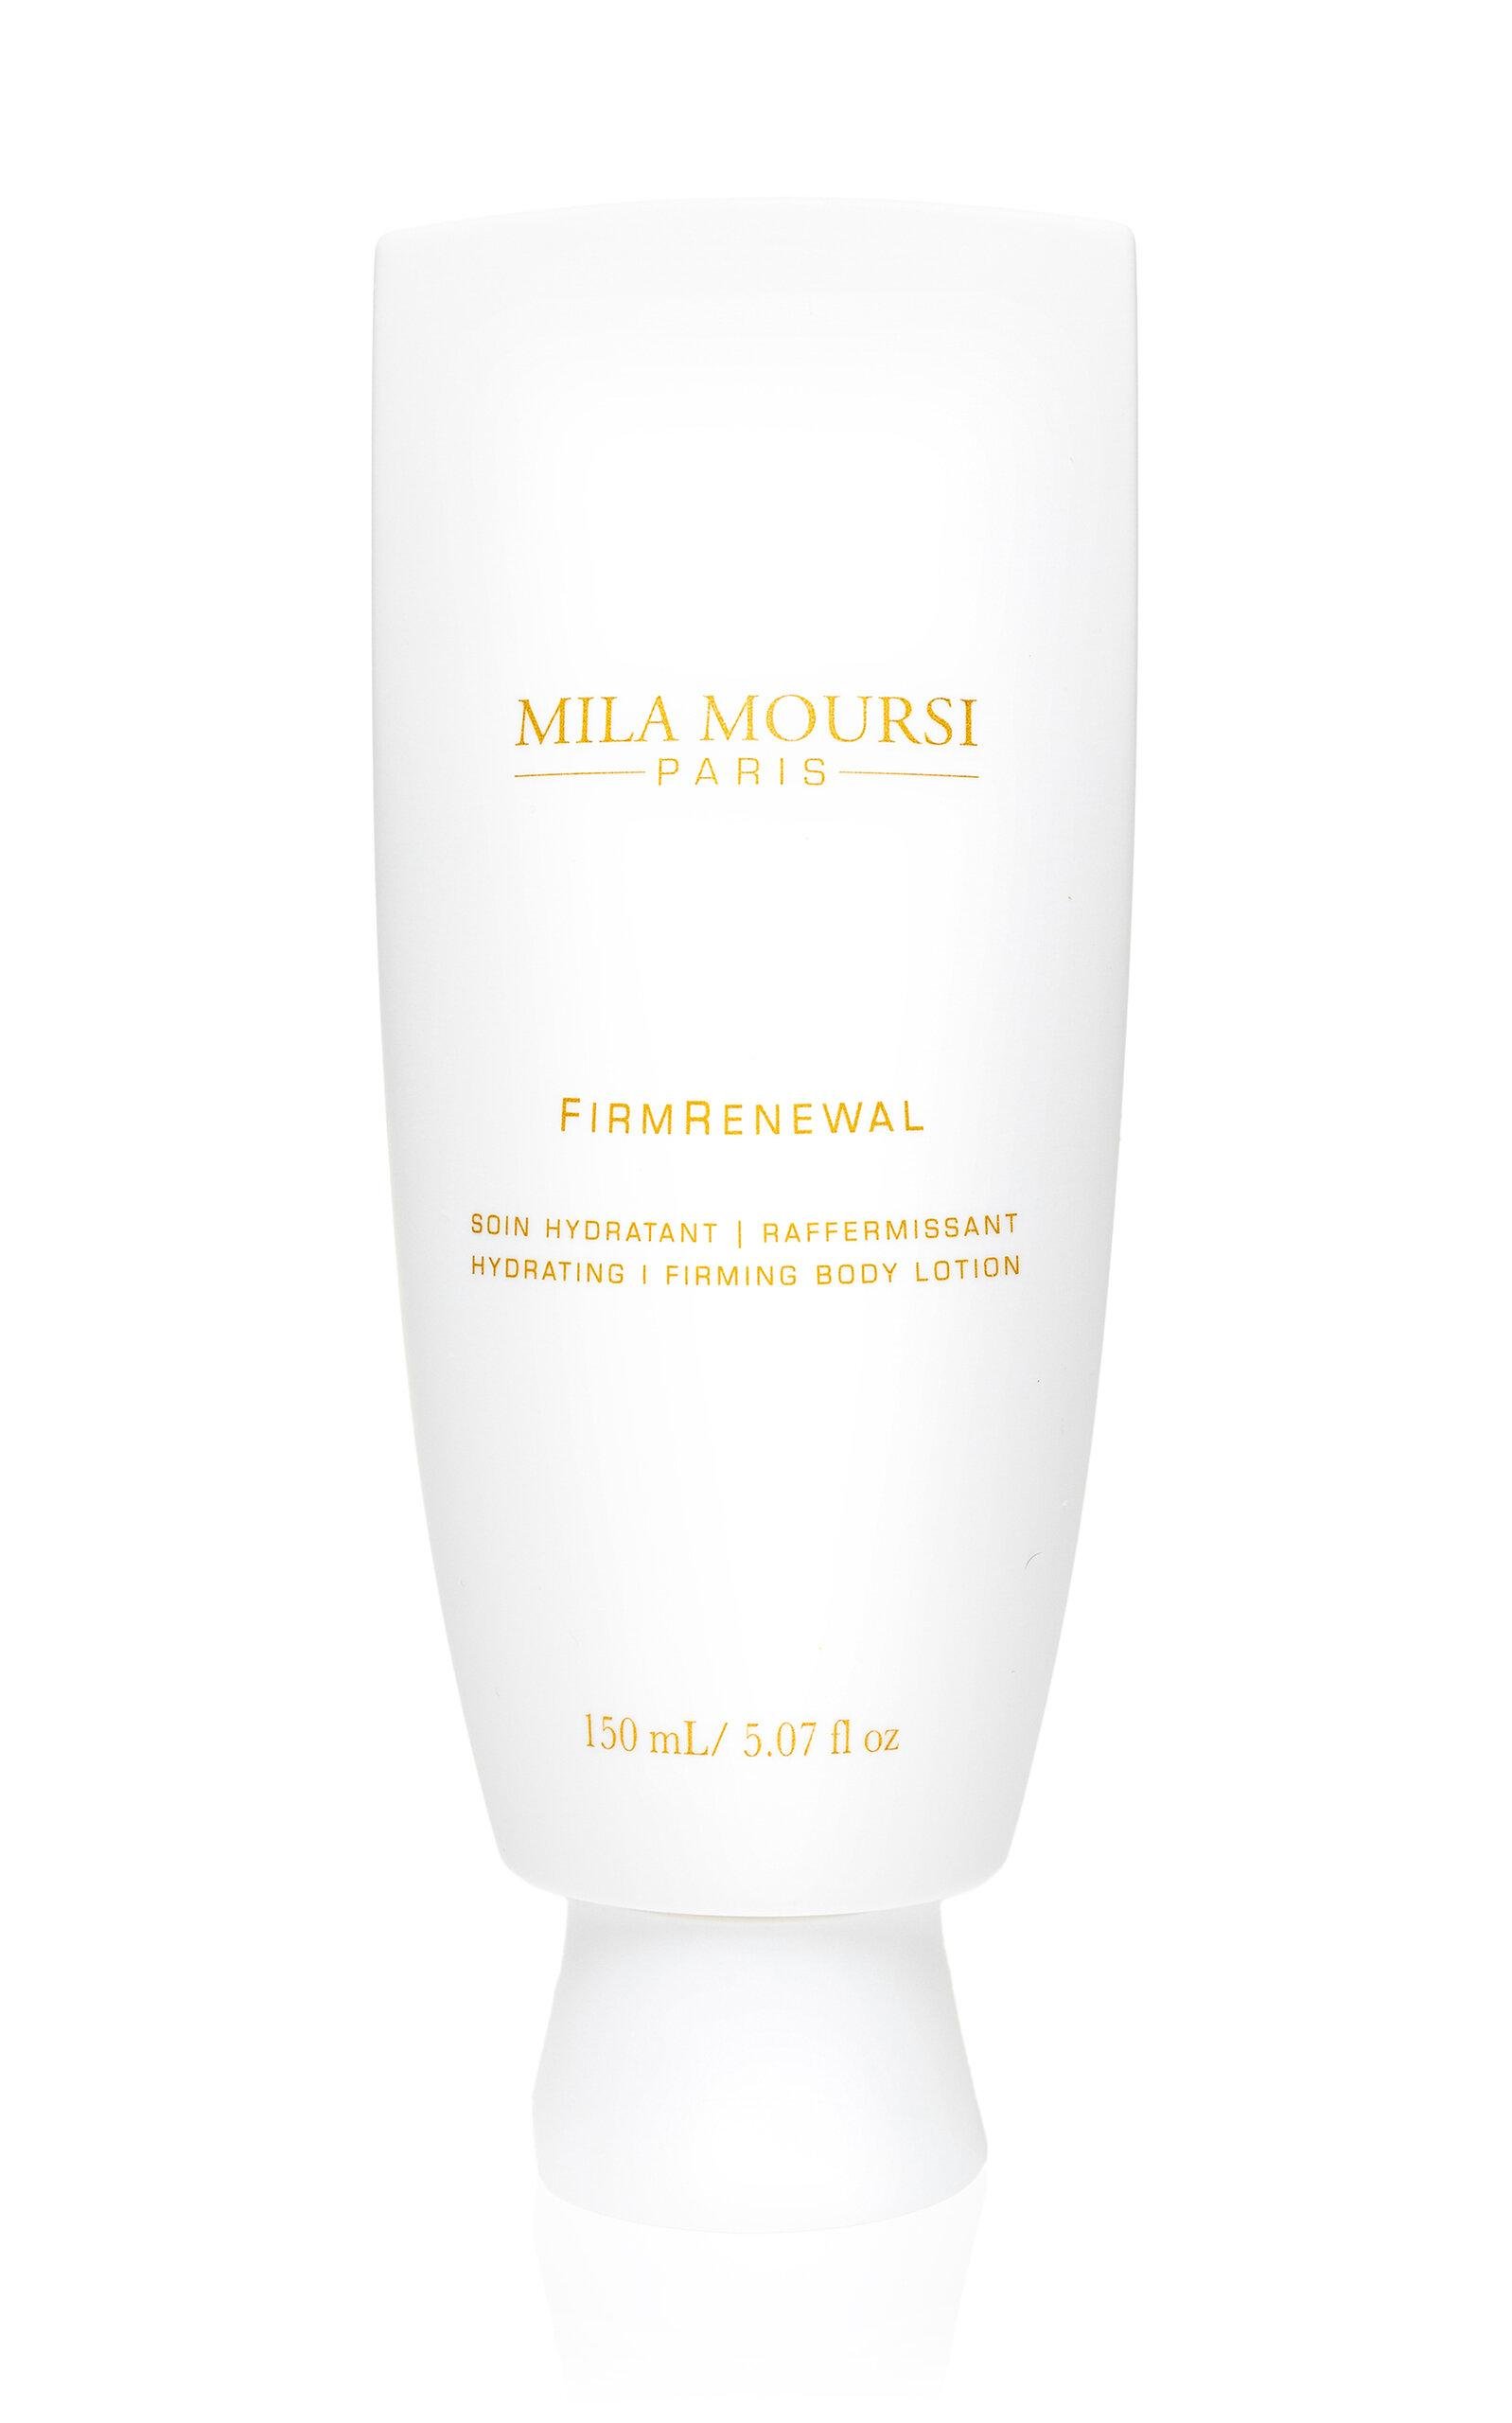 Mila Moursi Skin Care Firm Renewal Hydrating & Firming Body Lotion - Moda Operandi by MILA MOURSI SKIN CARE